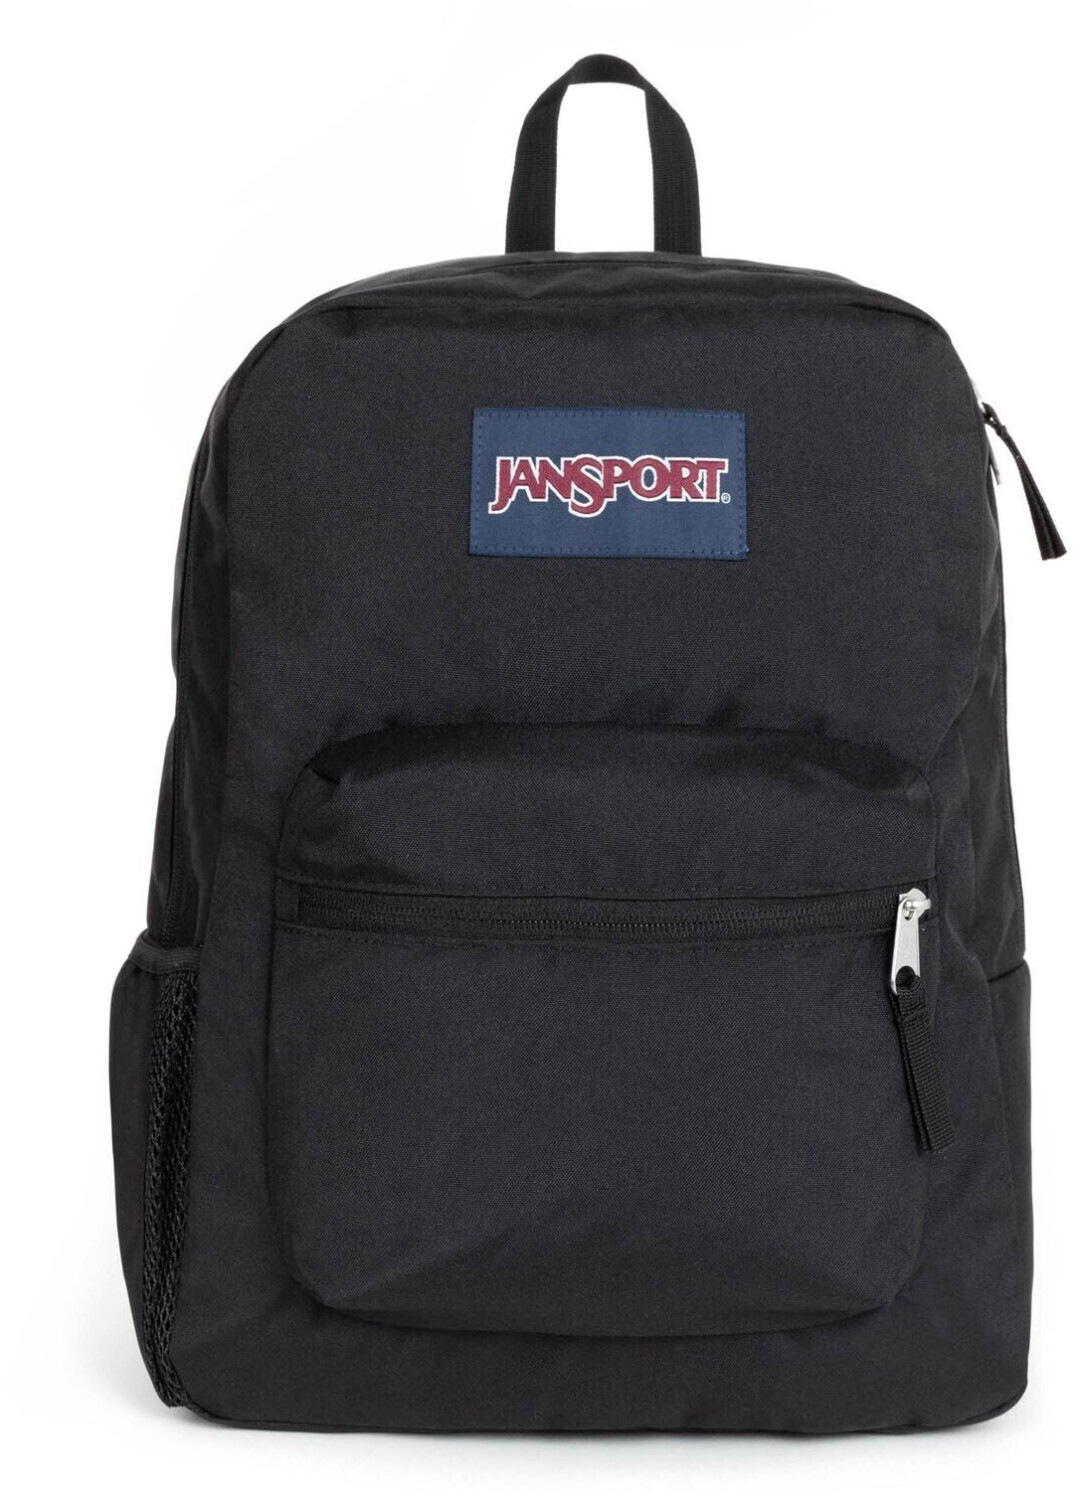 Photos - Backpack JanSport Cross Town black 